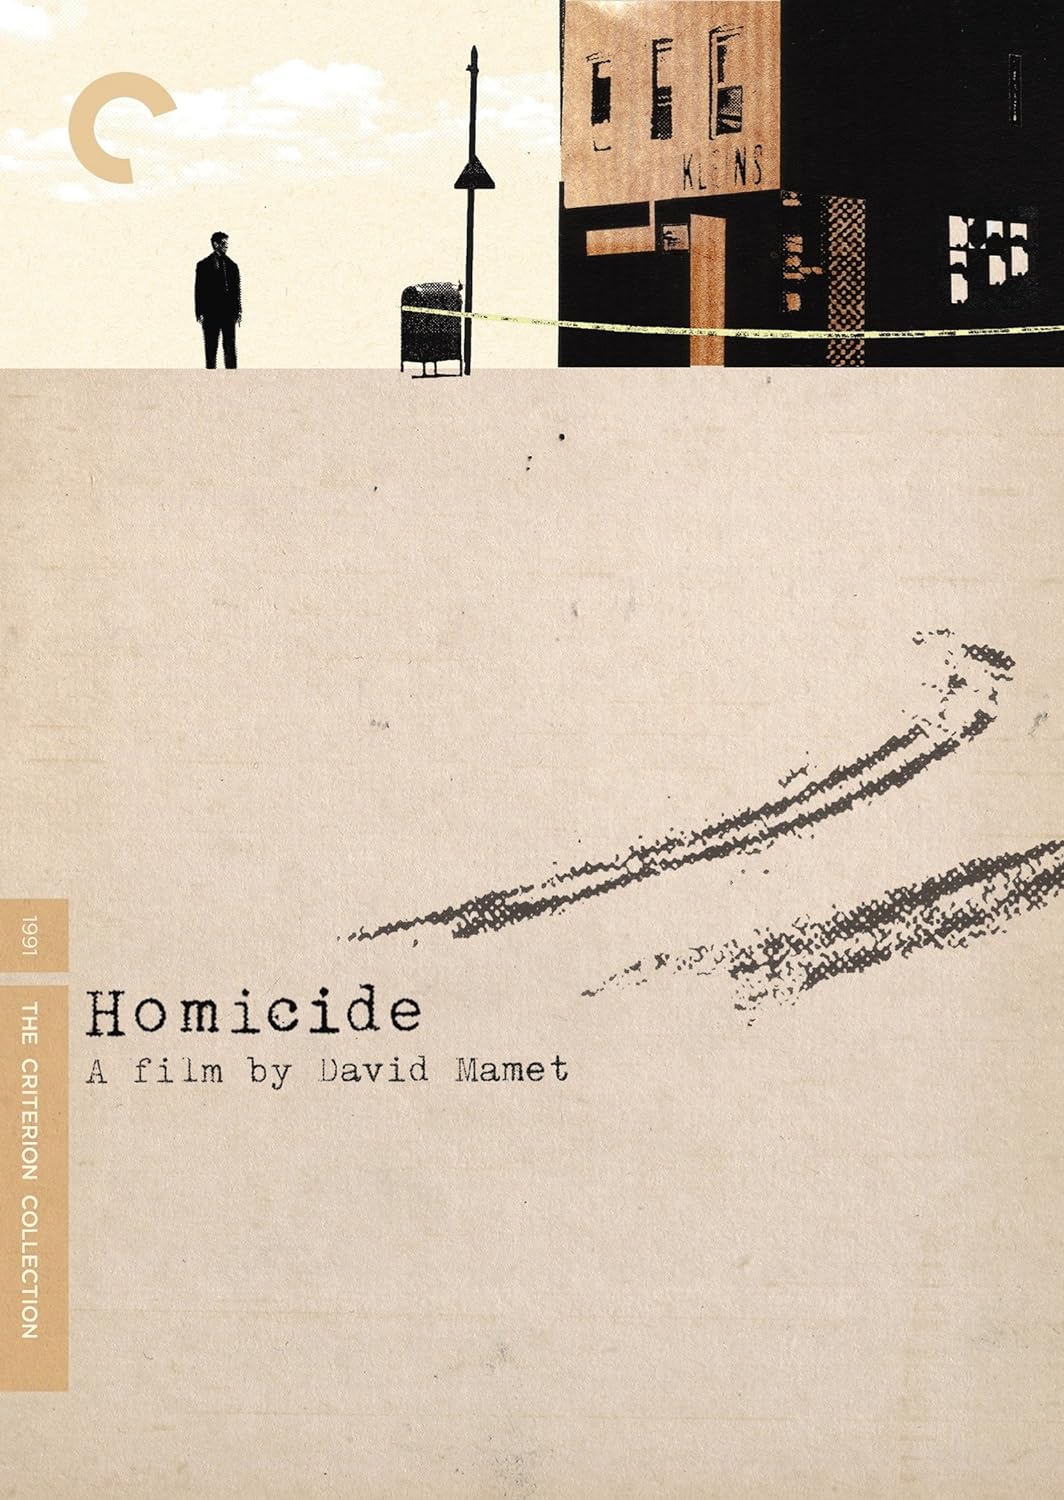 Homicide (Criterion)